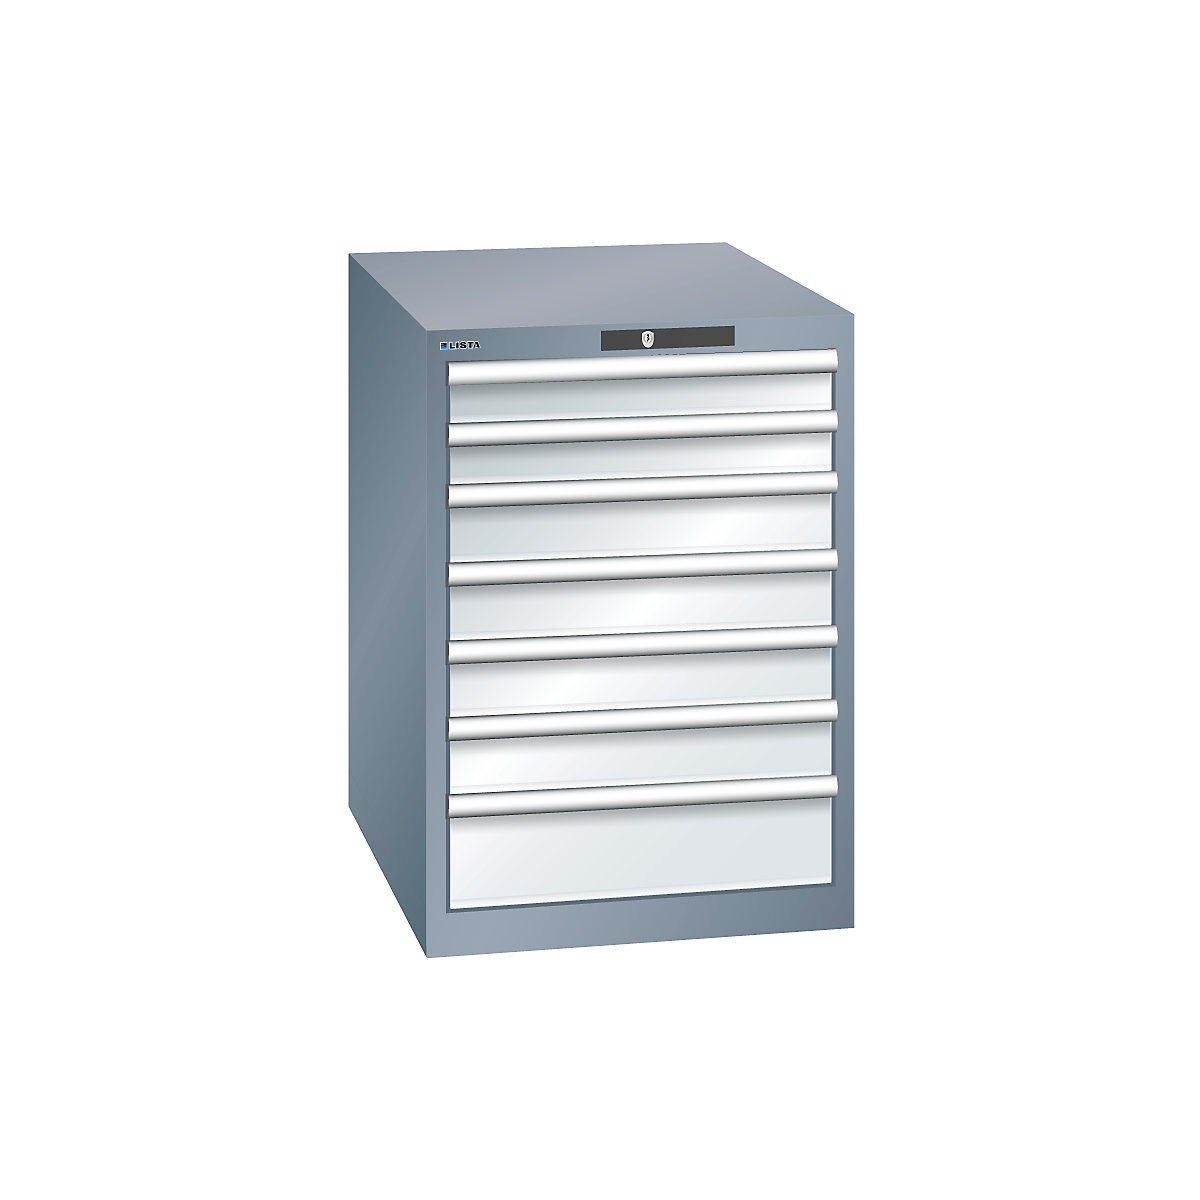 Drawer cupboard, sheet steel – LISTA, HxW 800 x 564 mm, 7 drawers, grey metallic / light grey-12